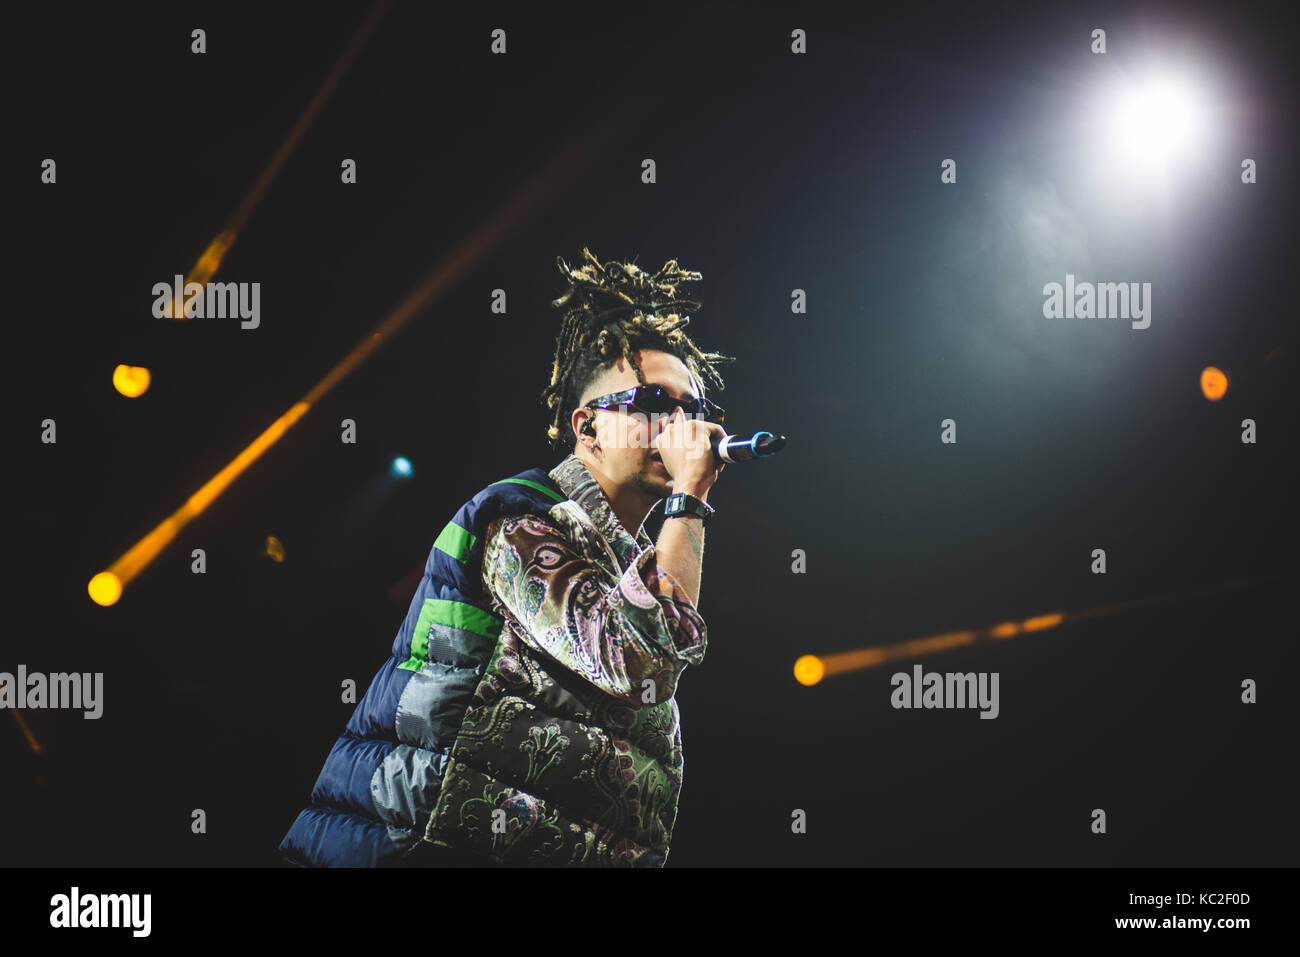 Torino, Italy. 30th Sep, 2017. The Italian rapper Ghali performing live on stage at the Officine grandi Riparazioni. Credit: Alessandro Bosio/Pacific Press/Alamy Live News Stock Photo